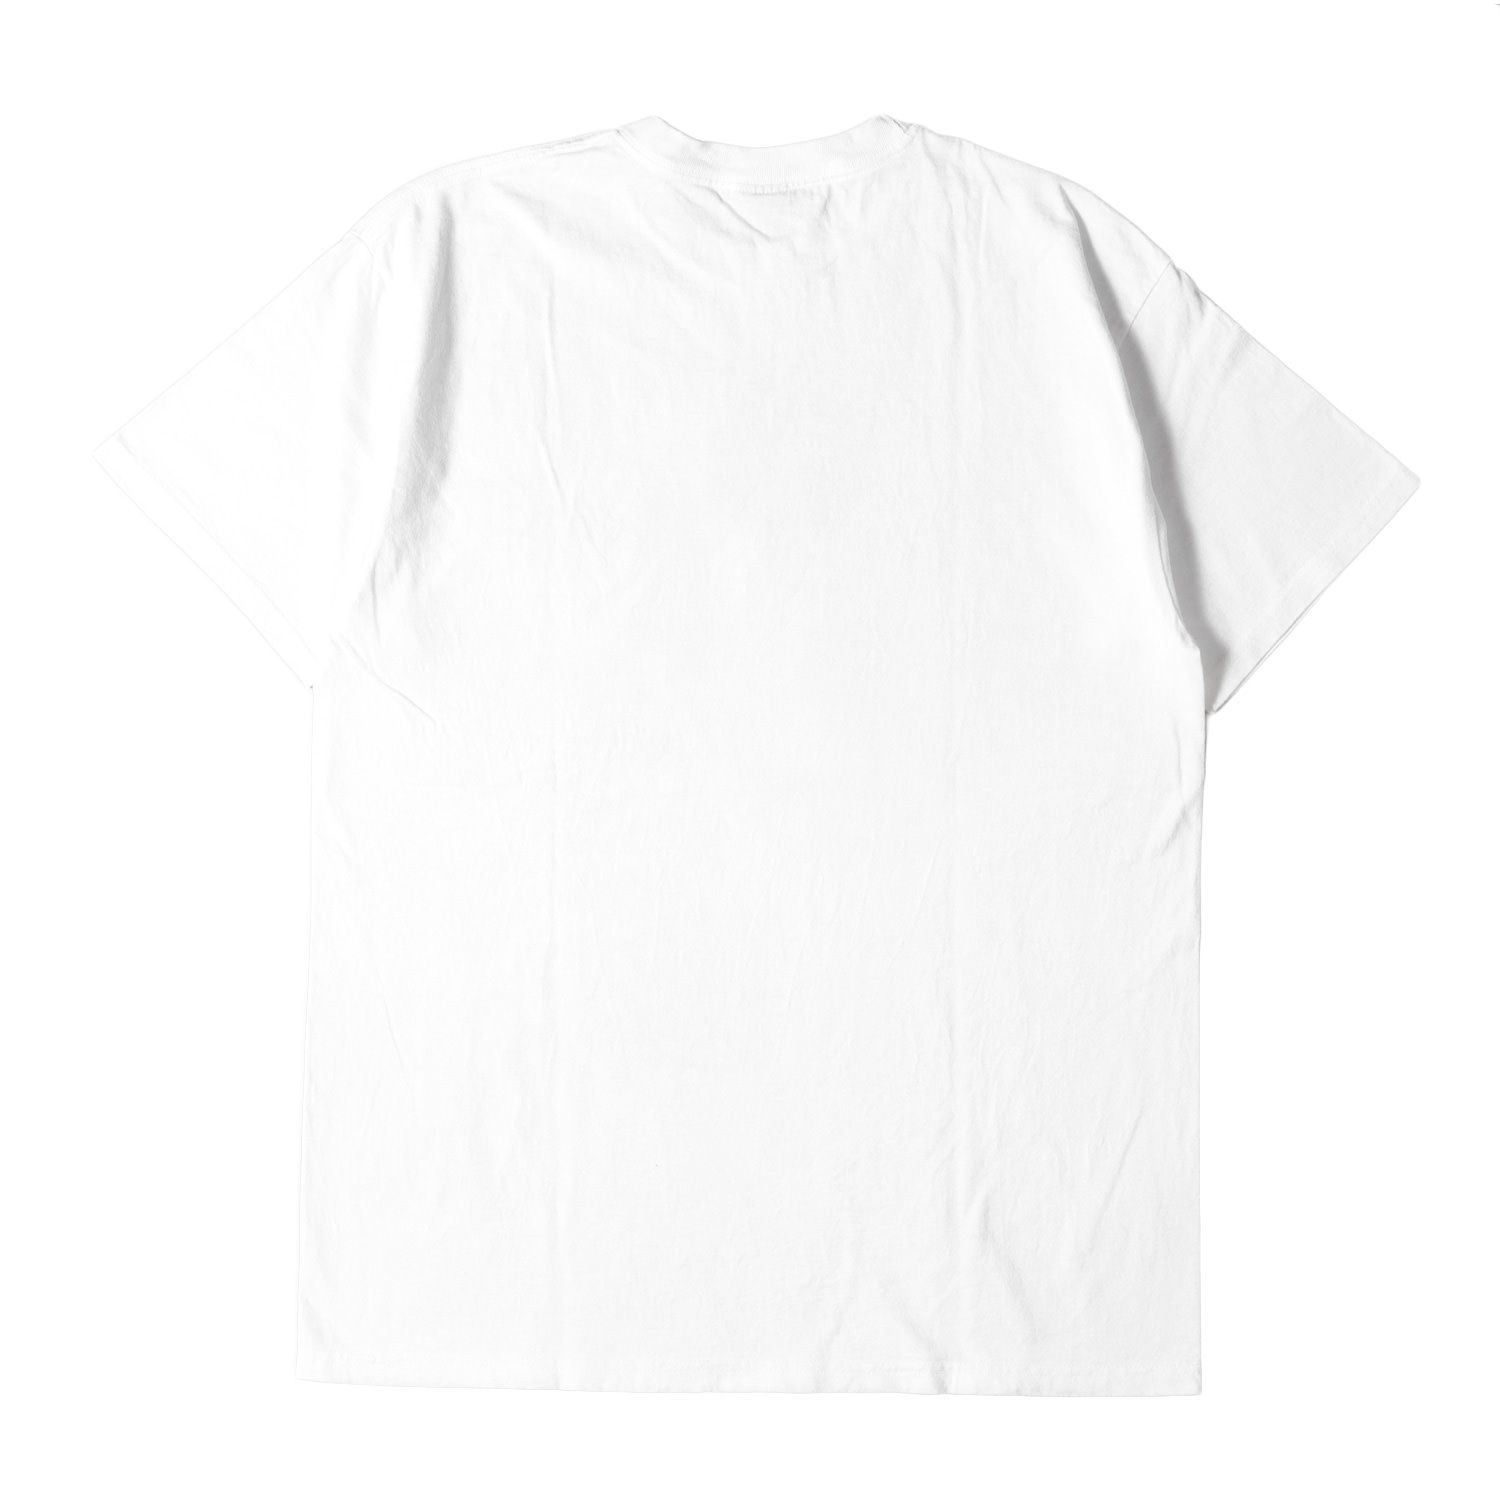 STUSSY ステューシー Tシャツ サイズ:L ビッグ SSリンク ロゴ クルーネック 半袖 Tシャツ ホワイト 白 トップス カットソー ストリート ブランド カジュアル【メンズ】トップス